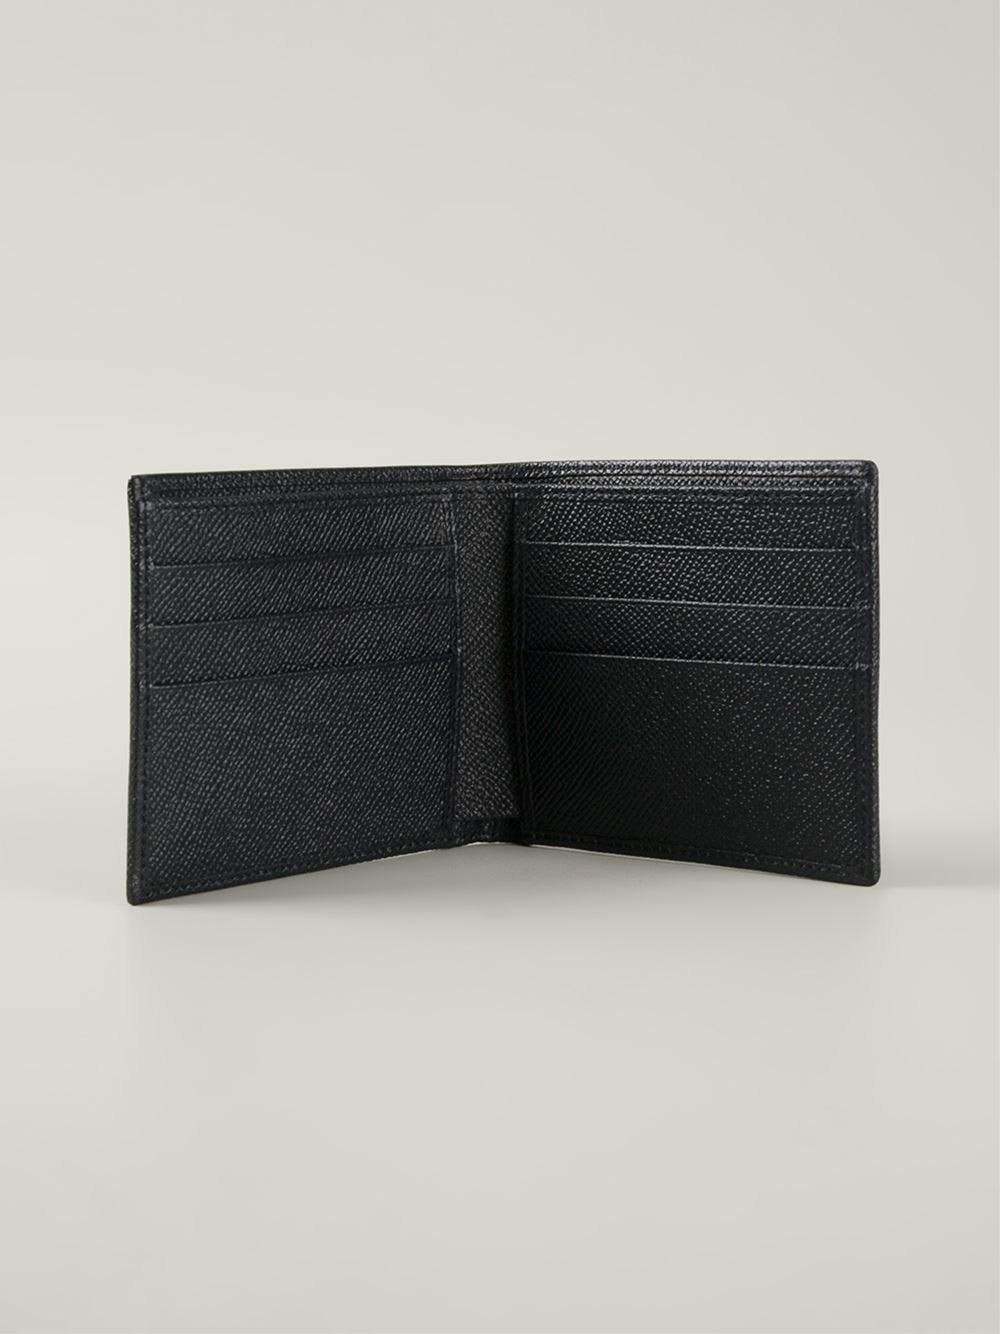 Lyst - Dolce & Gabbana Dauphine Billfold Wallet in Black for Men